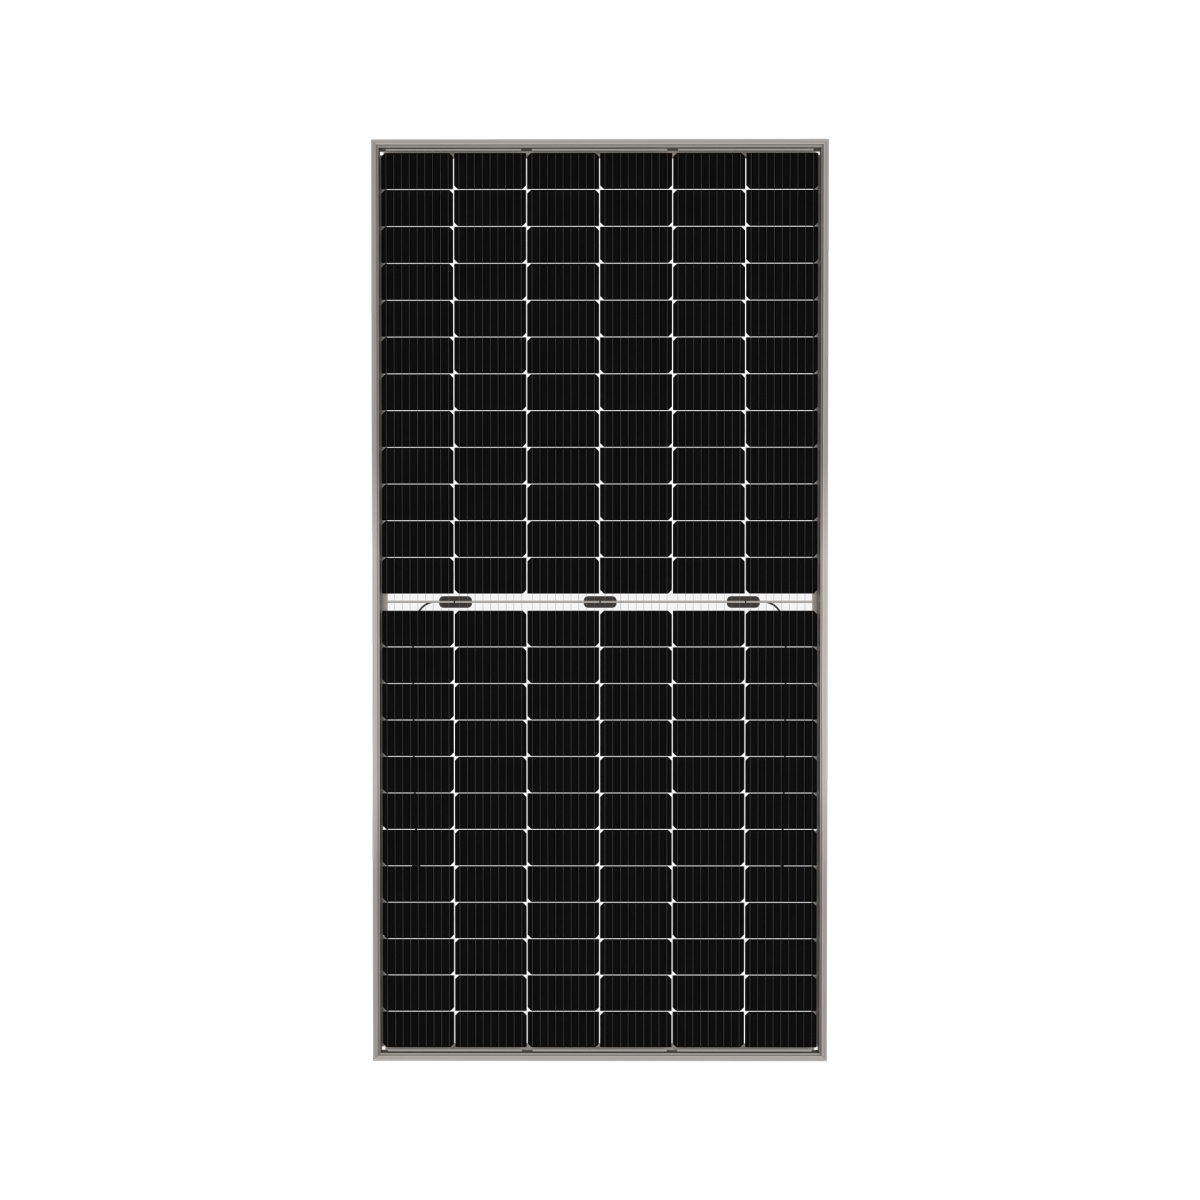 TommaTech 450 Watt 144 Percmono Bifacial Half-Cut Multi Busbar Solar Panel